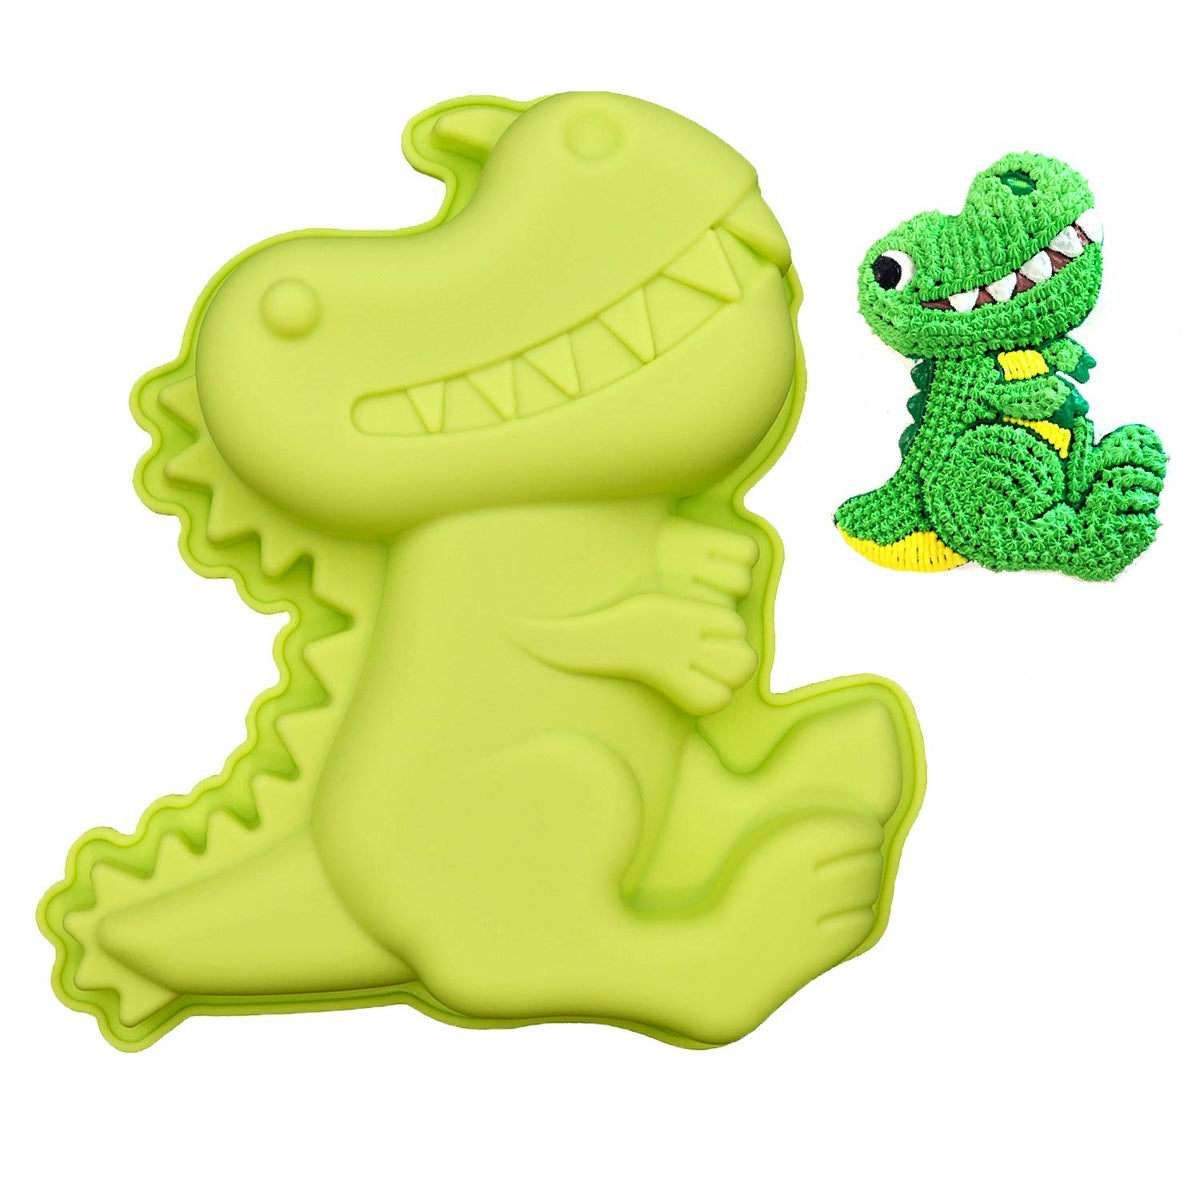  Joyeee Cartoon Dinosaur Silicone Baking Tray Molds